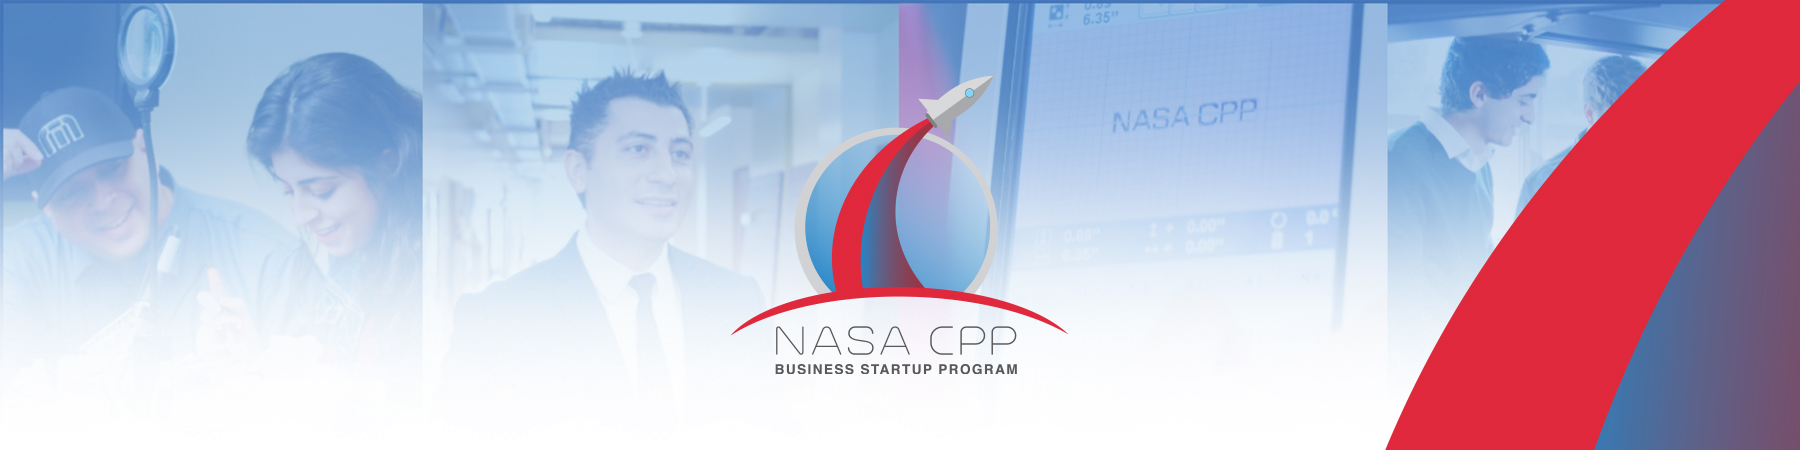 NASACPP Business Startup Program